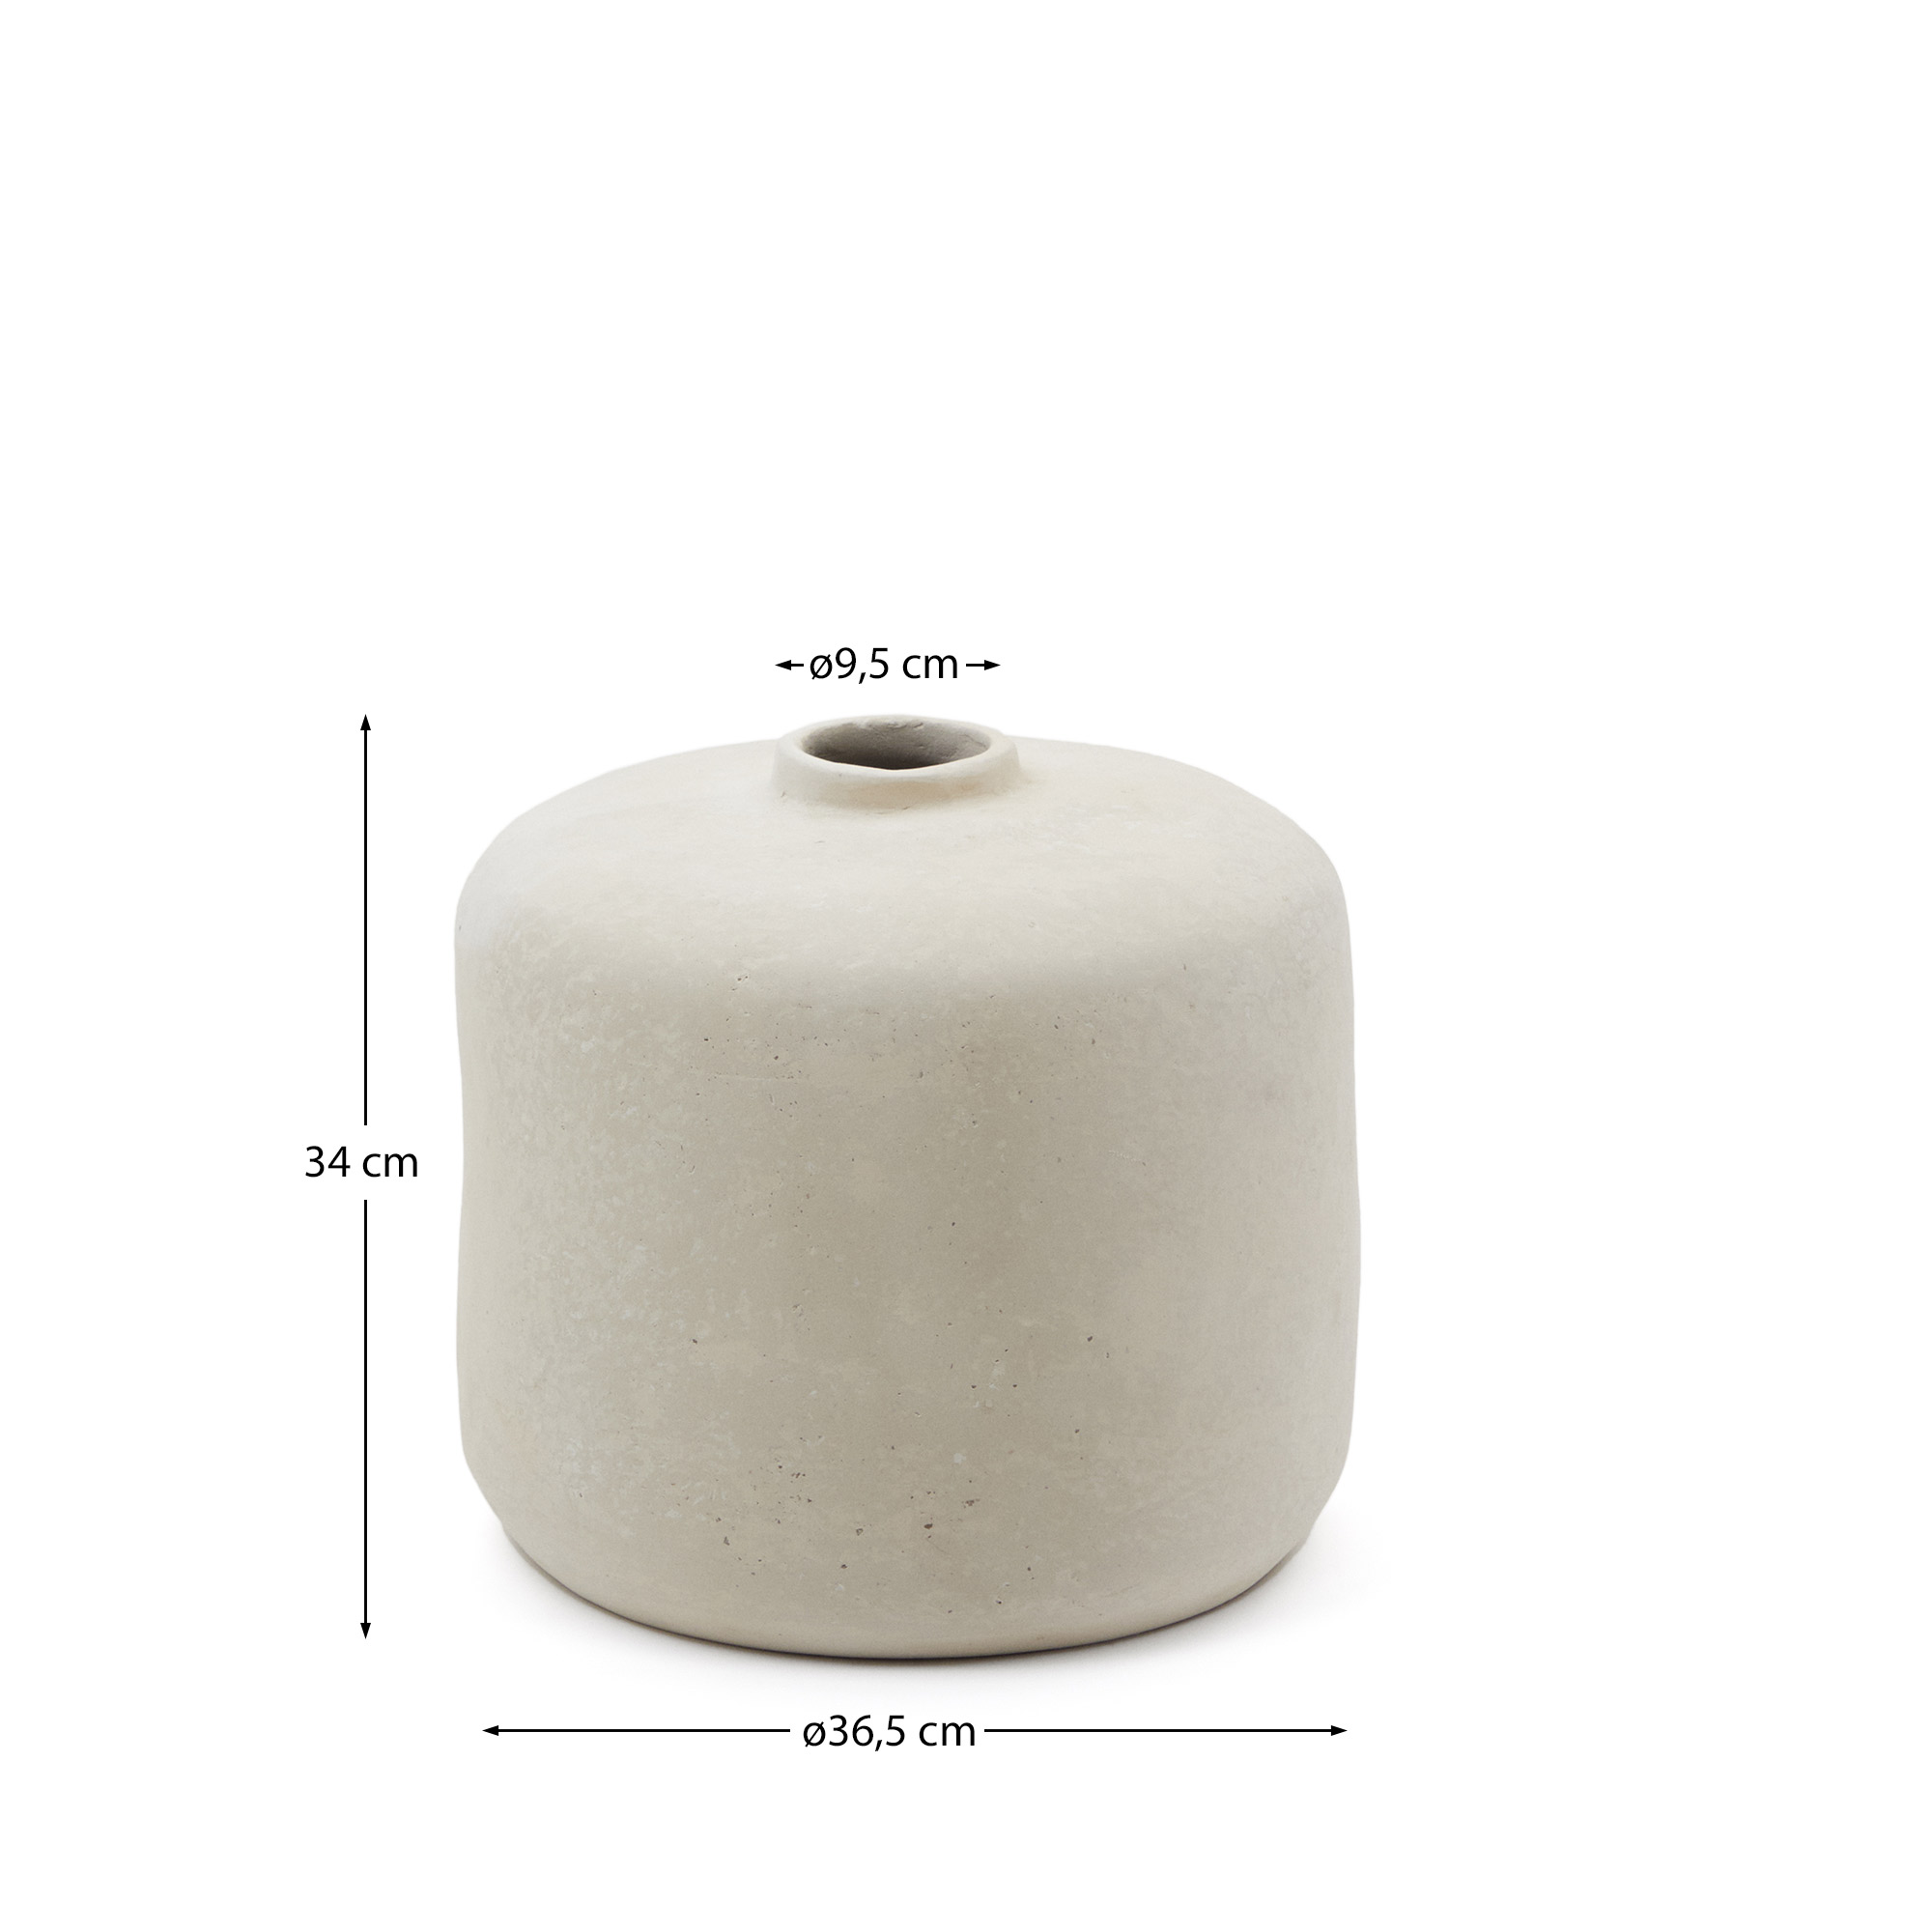 Serina papier mâché vase in white 36.5 cm - sizes